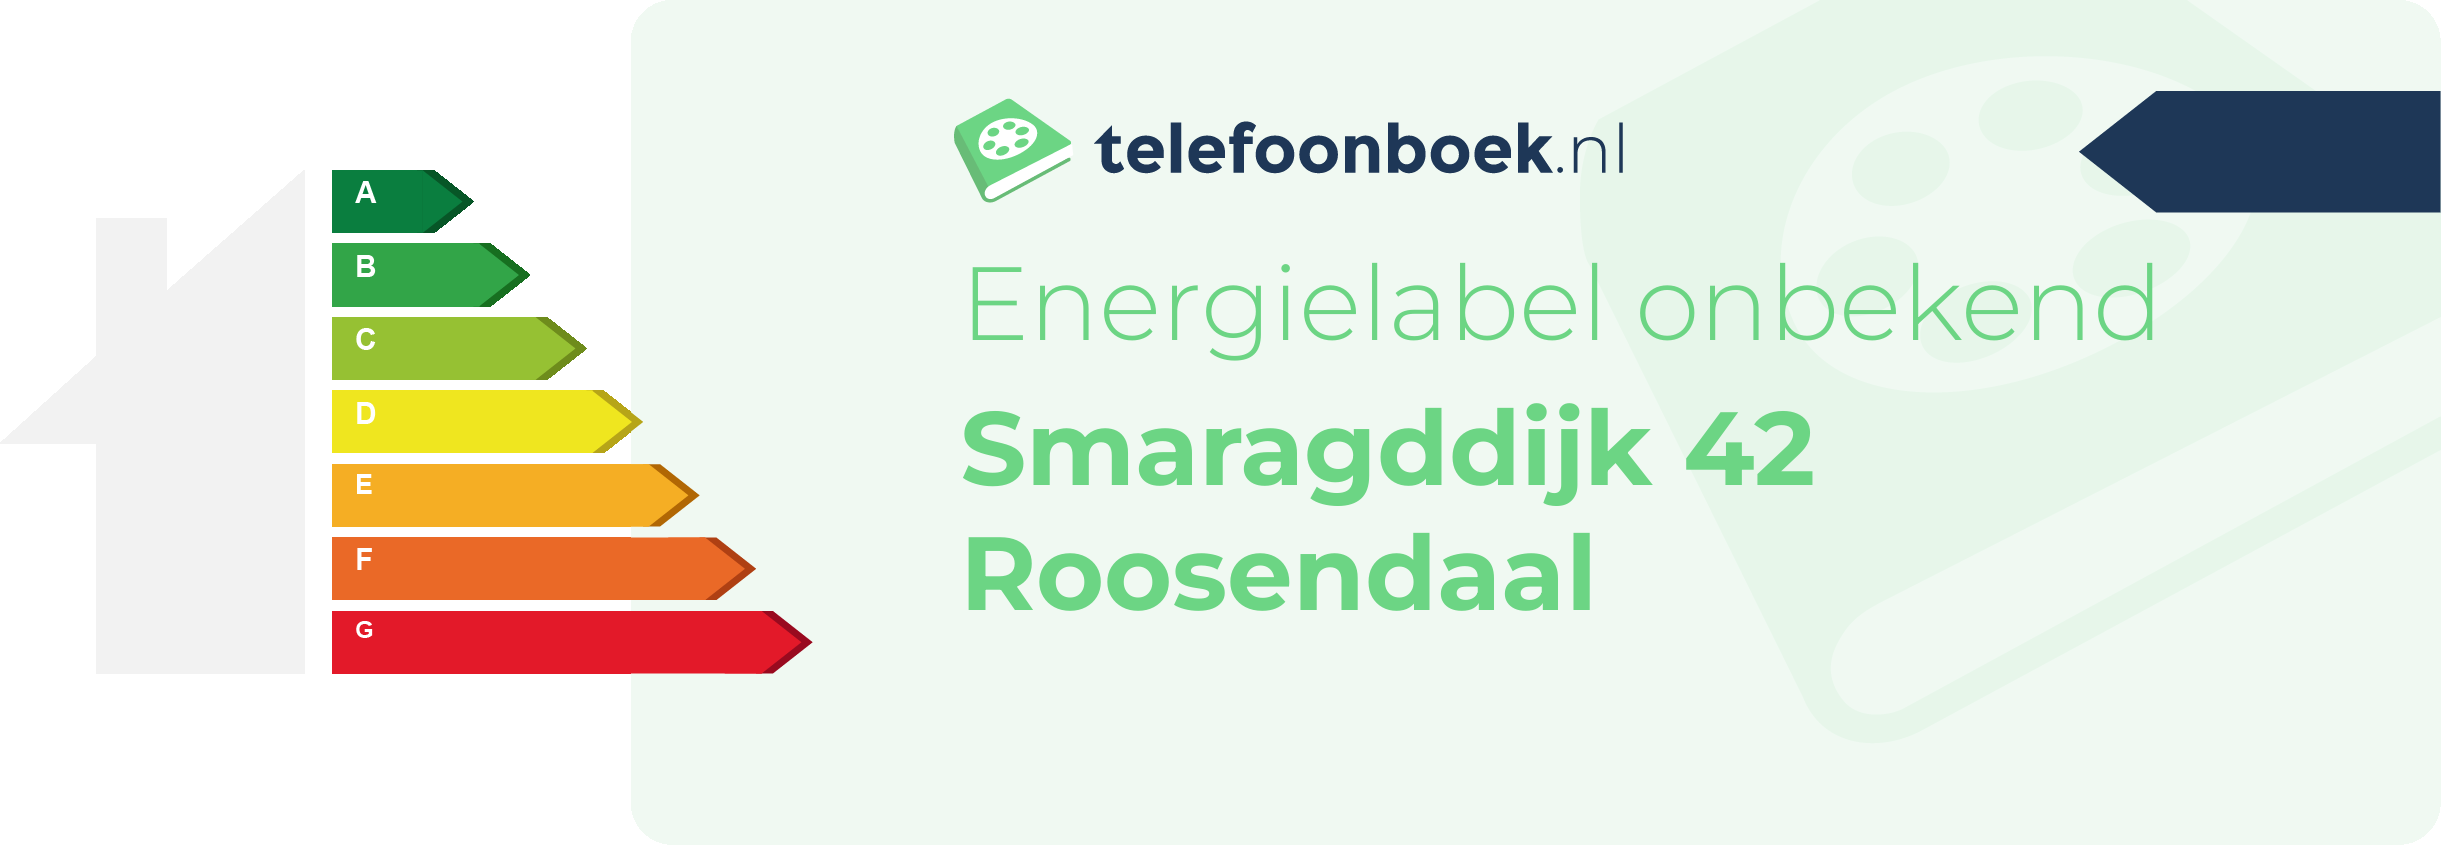 Energielabel Smaragddijk 42 Roosendaal